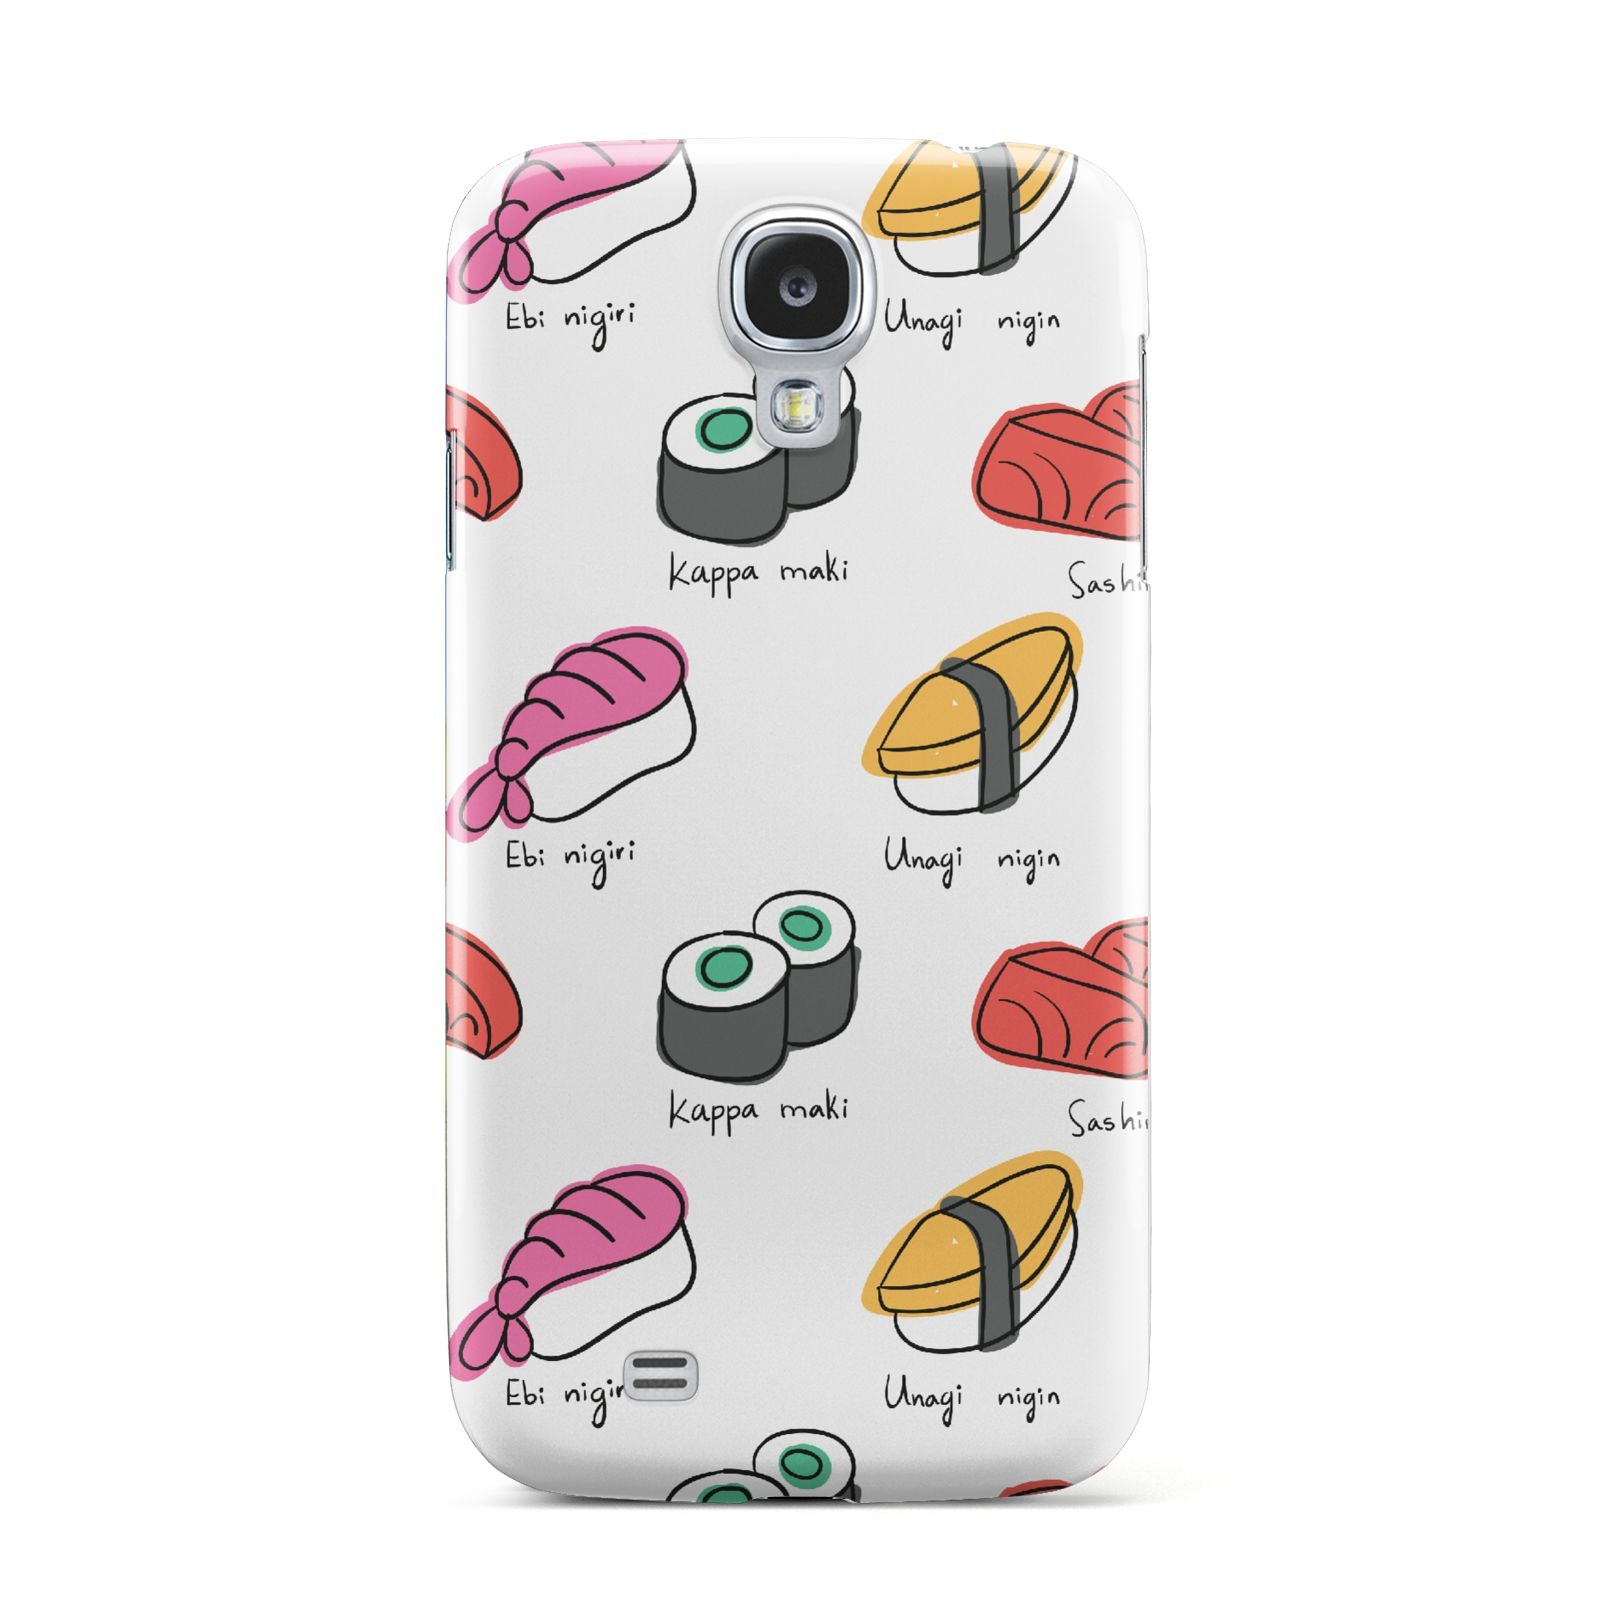 Sashimi Kappa Maki Sushi Samsung Galaxy S4 Case